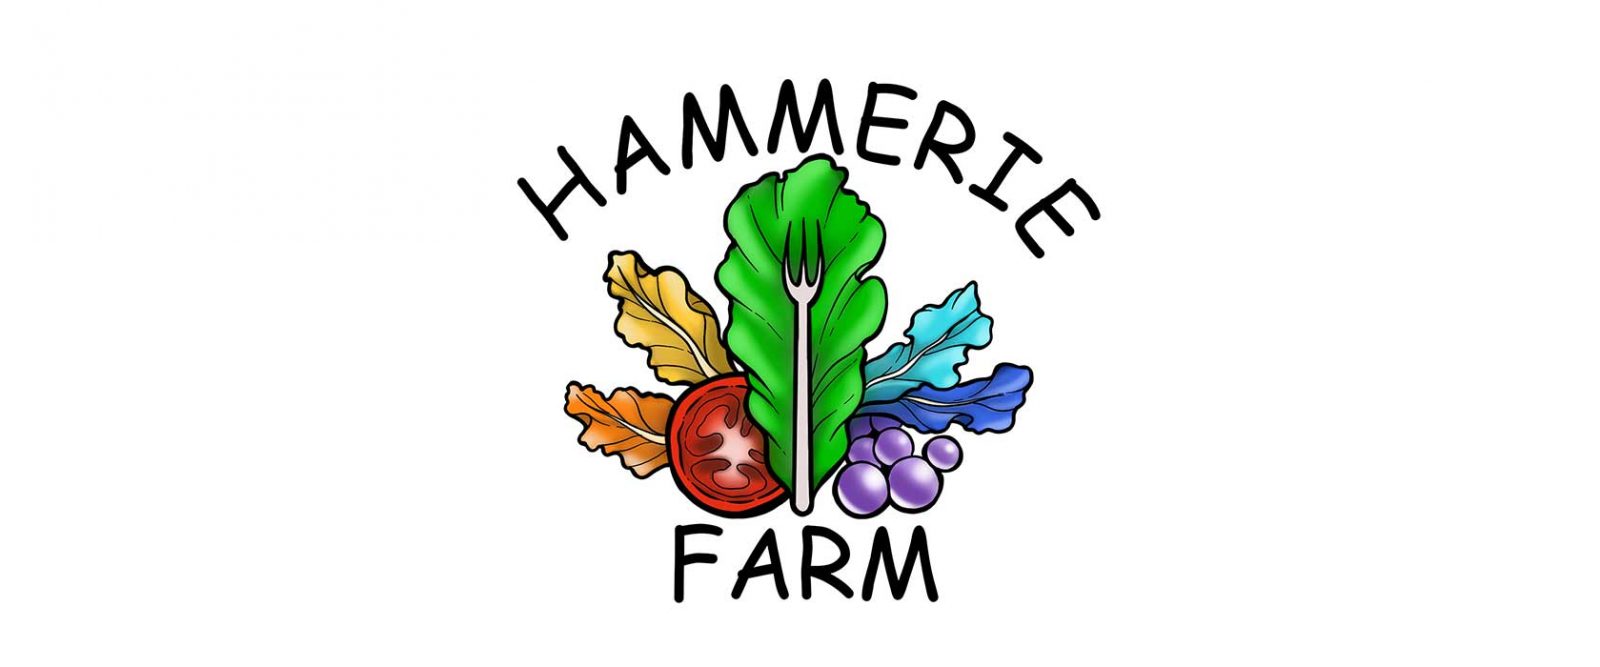 Hammerie Farm logo